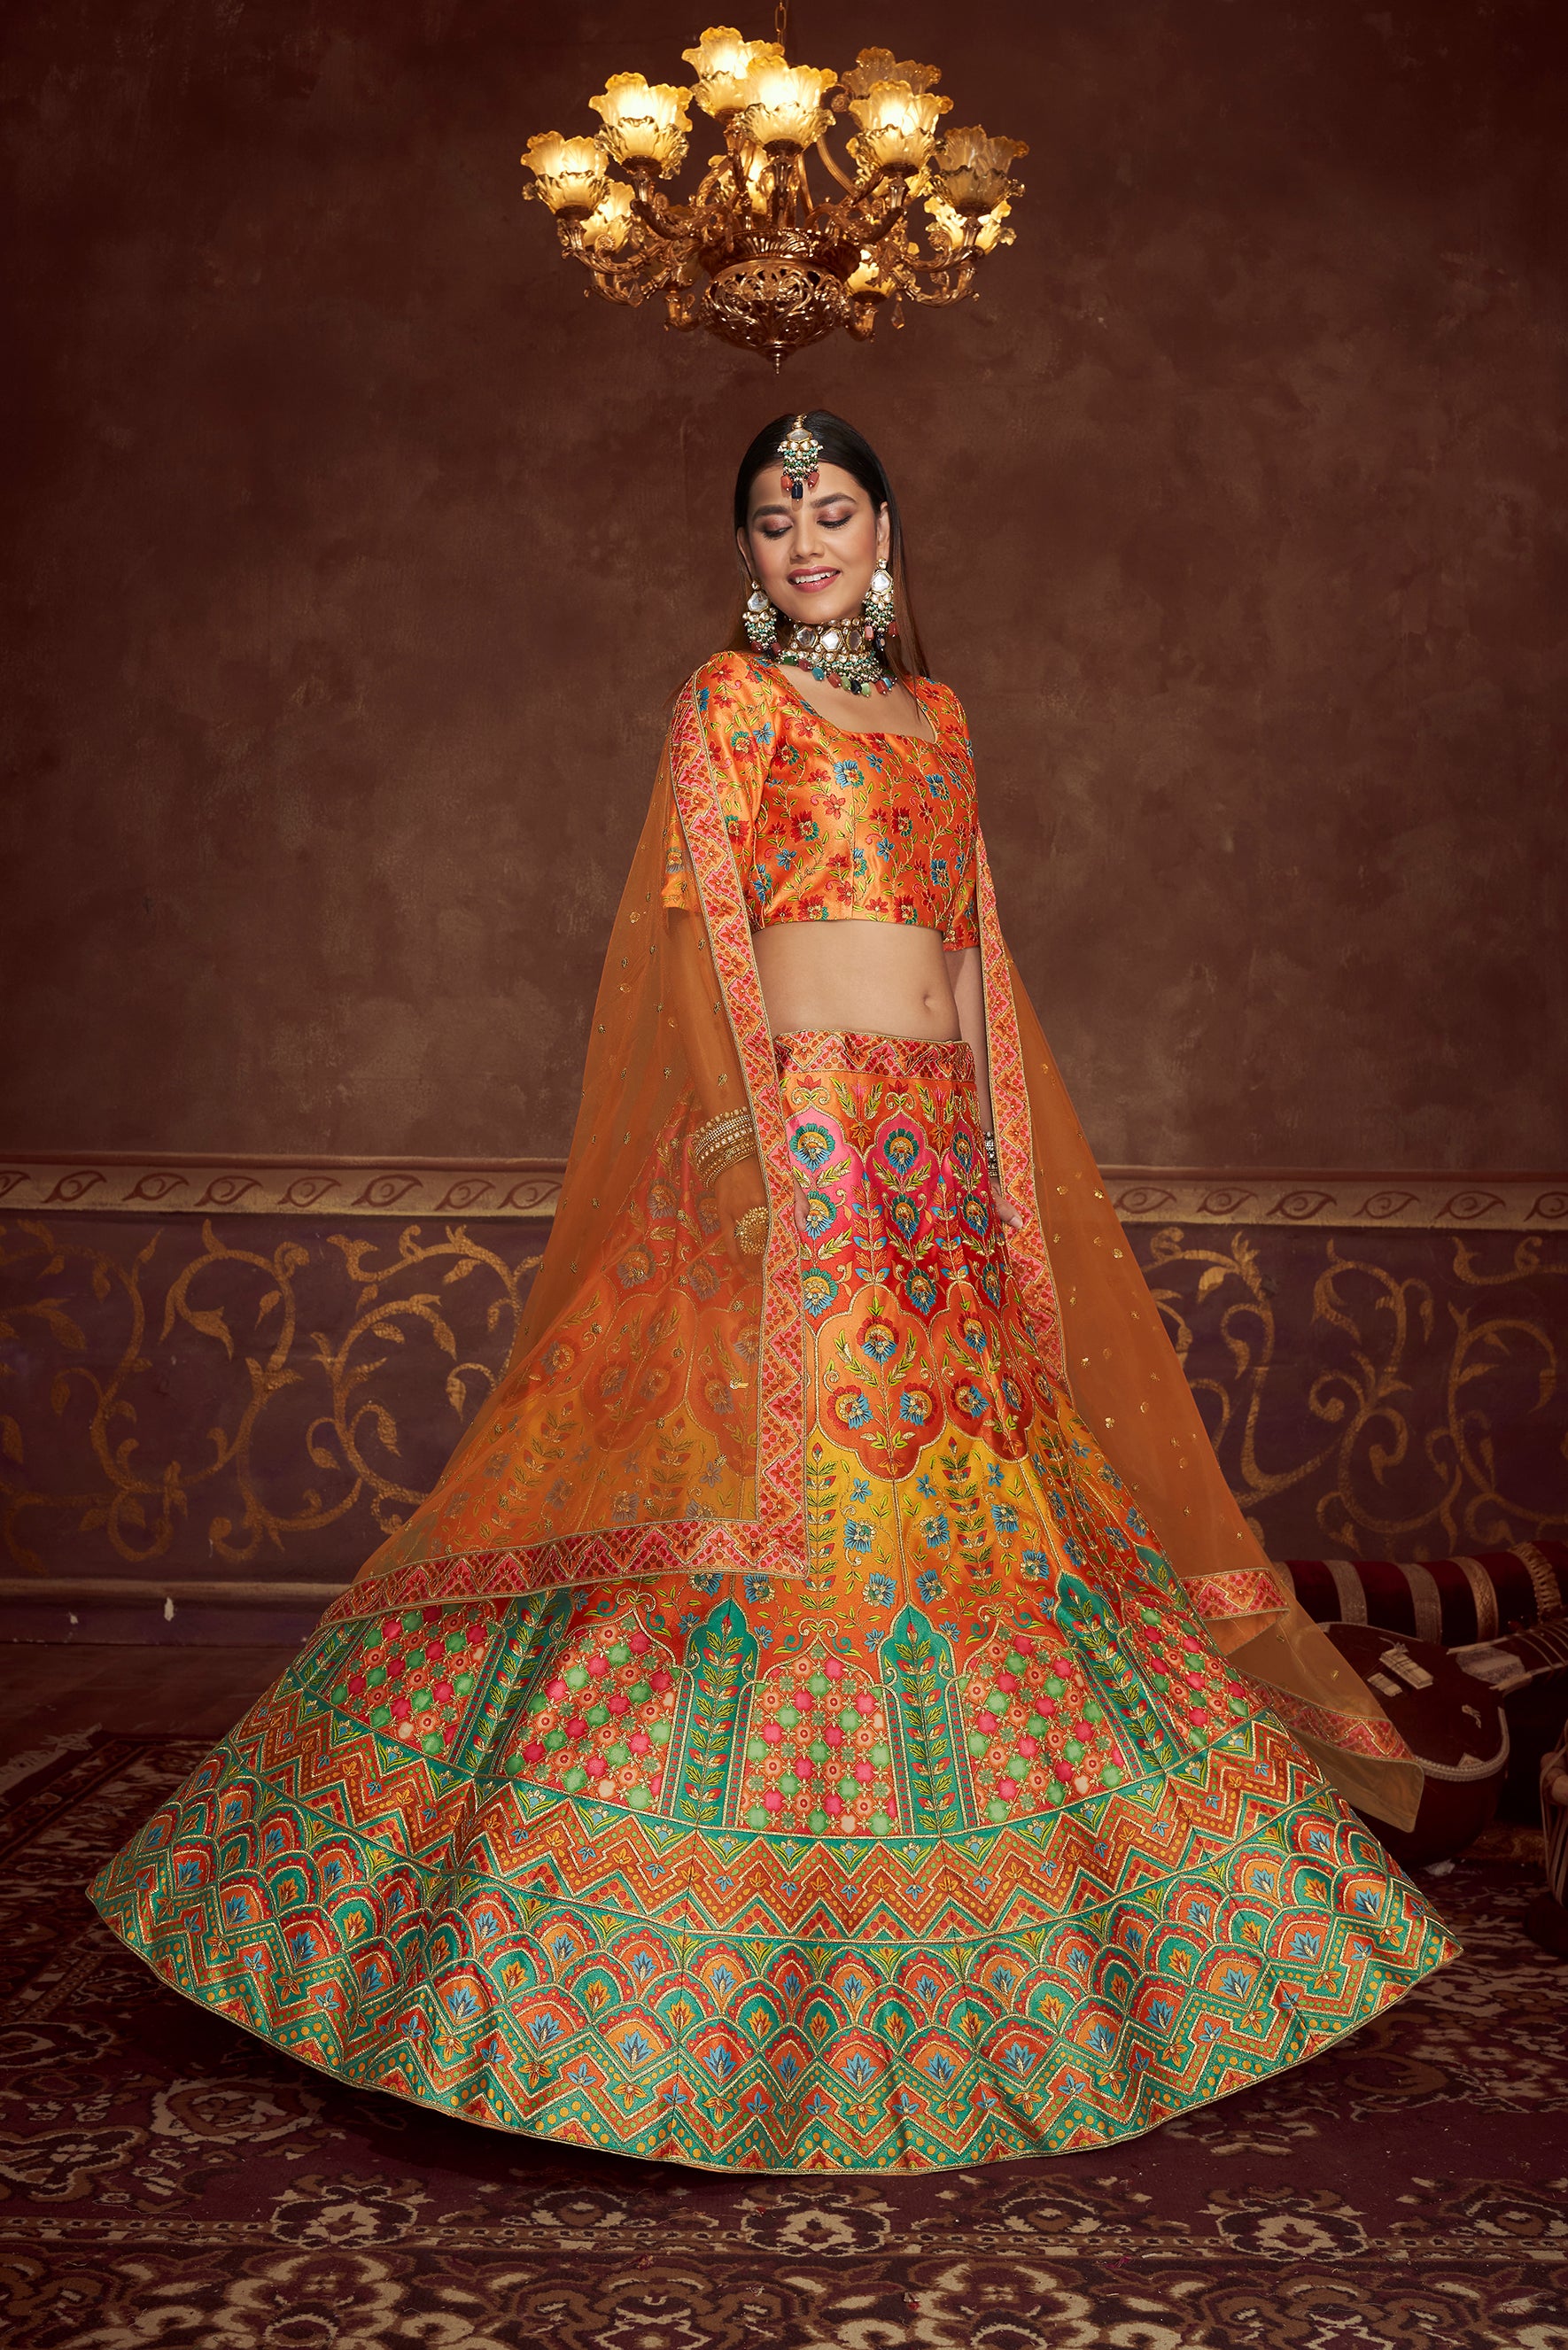 Astounding Multi-Colored Designer Bridal Lehenga Choli